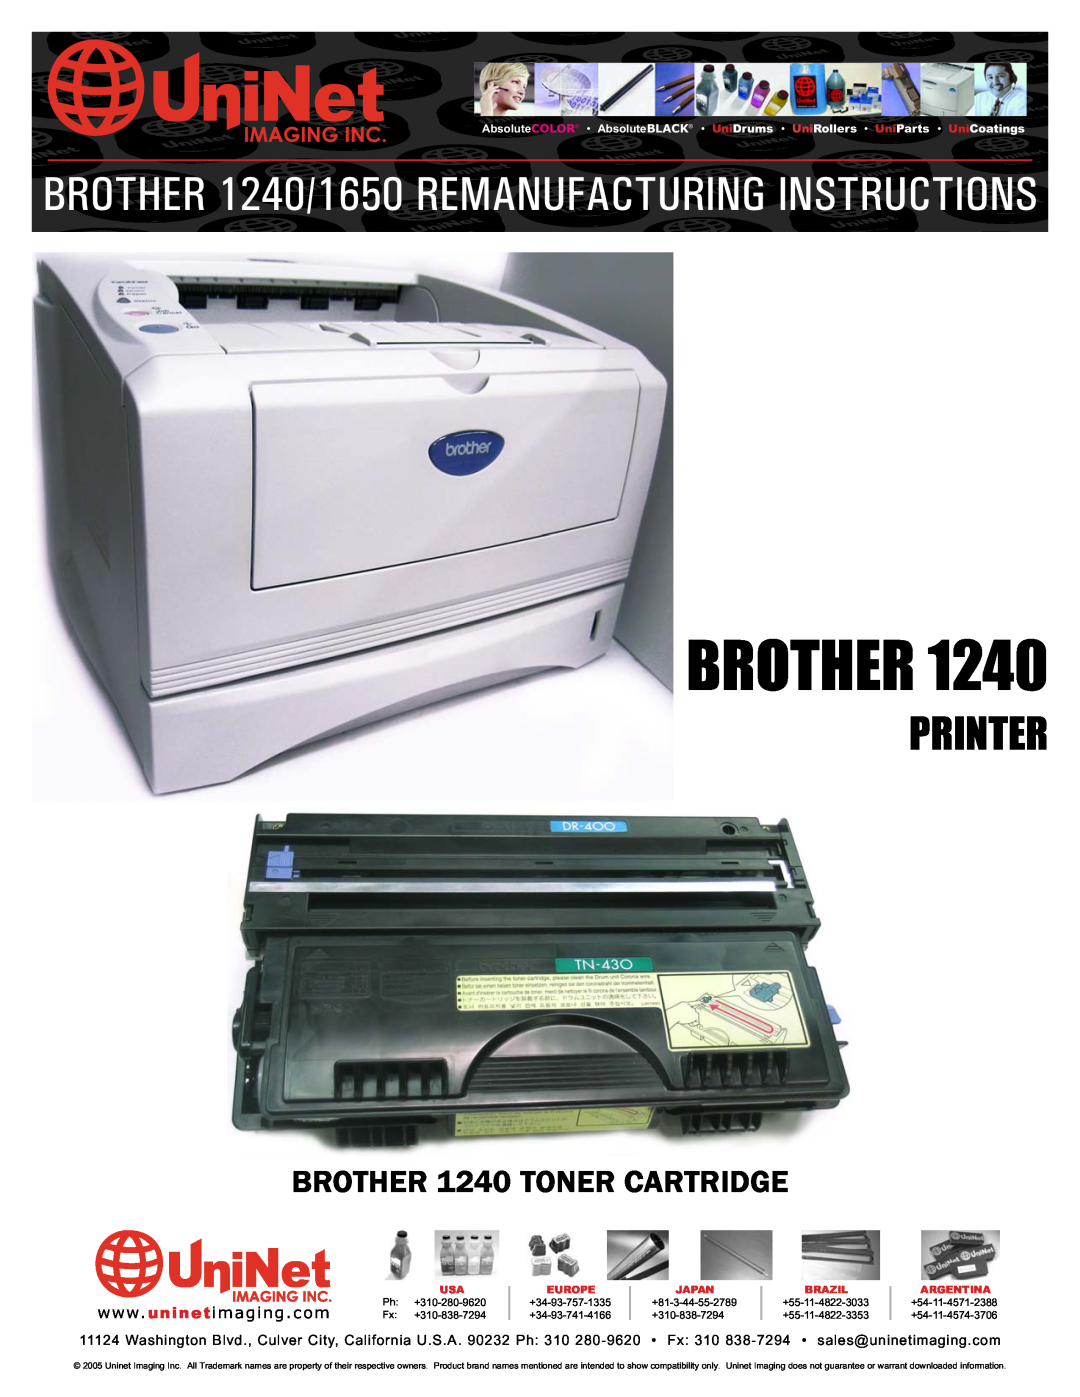 Brother manual Brother, Printer, BROTHER 1240 TONER CARTRIDGE, Ph +310-280-9620 Fx +310-838-7294, Europe 